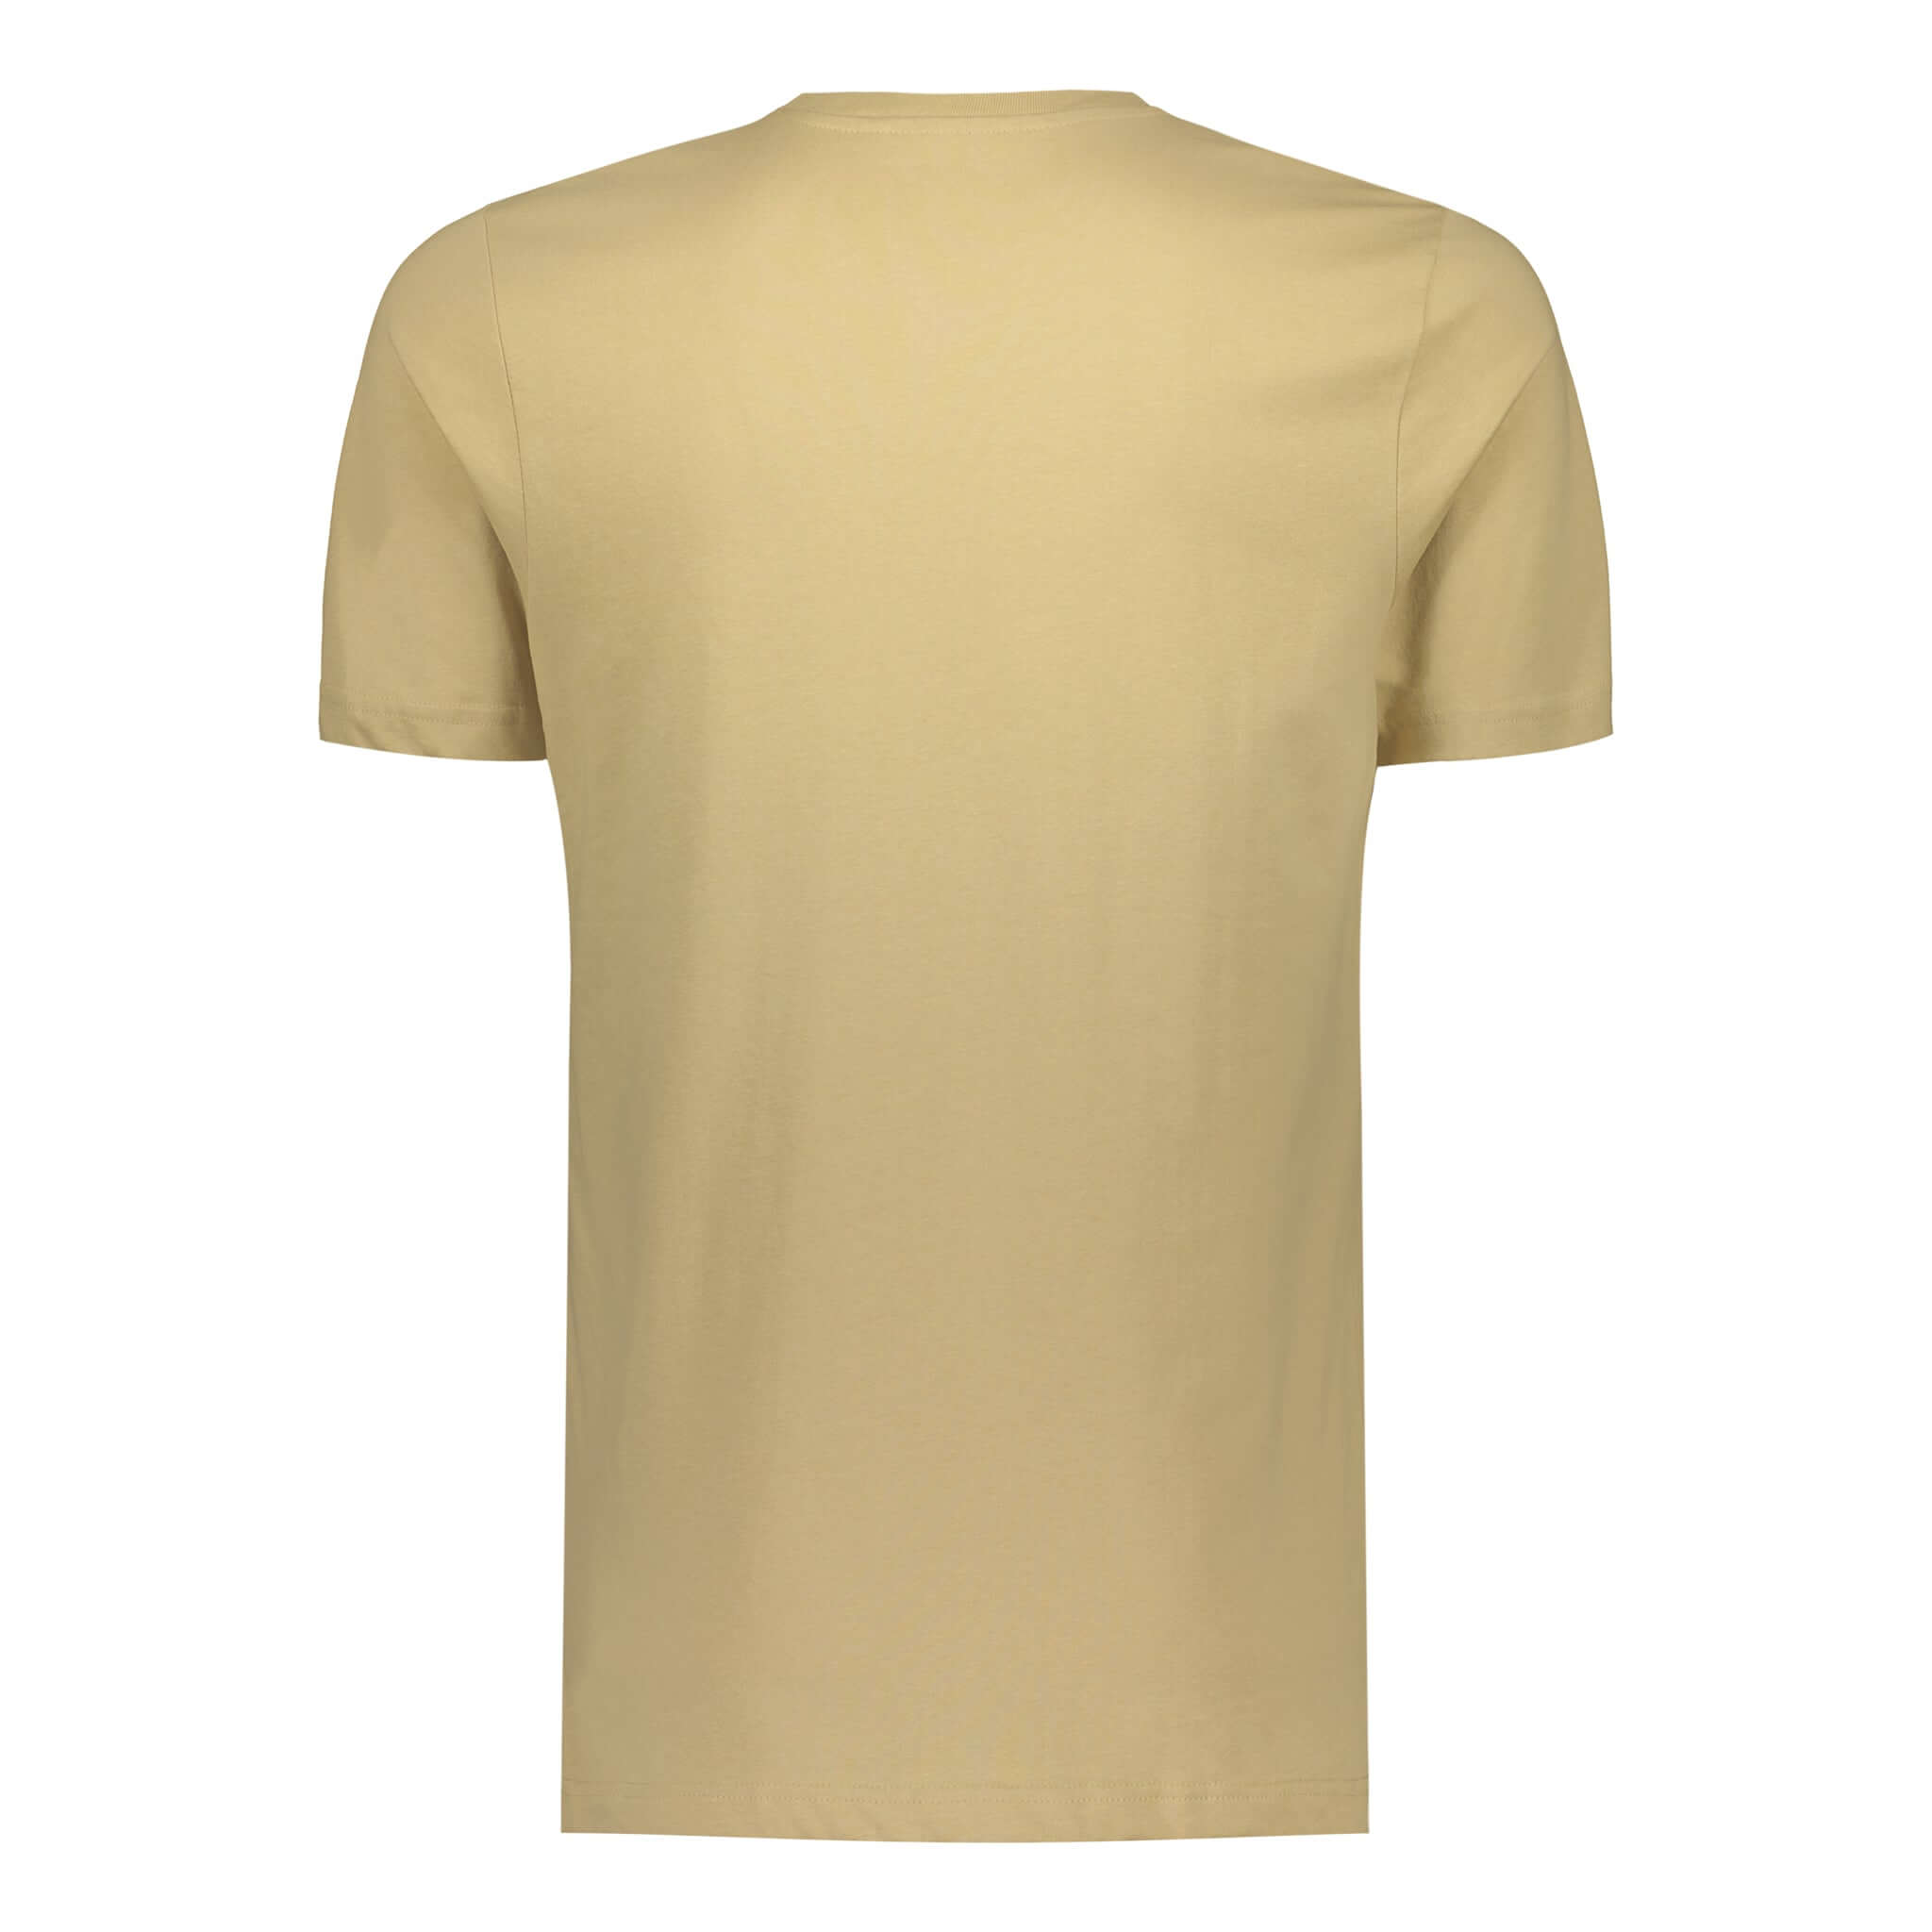 ENCE Basic T-Shirt Sand | ENCE Shop